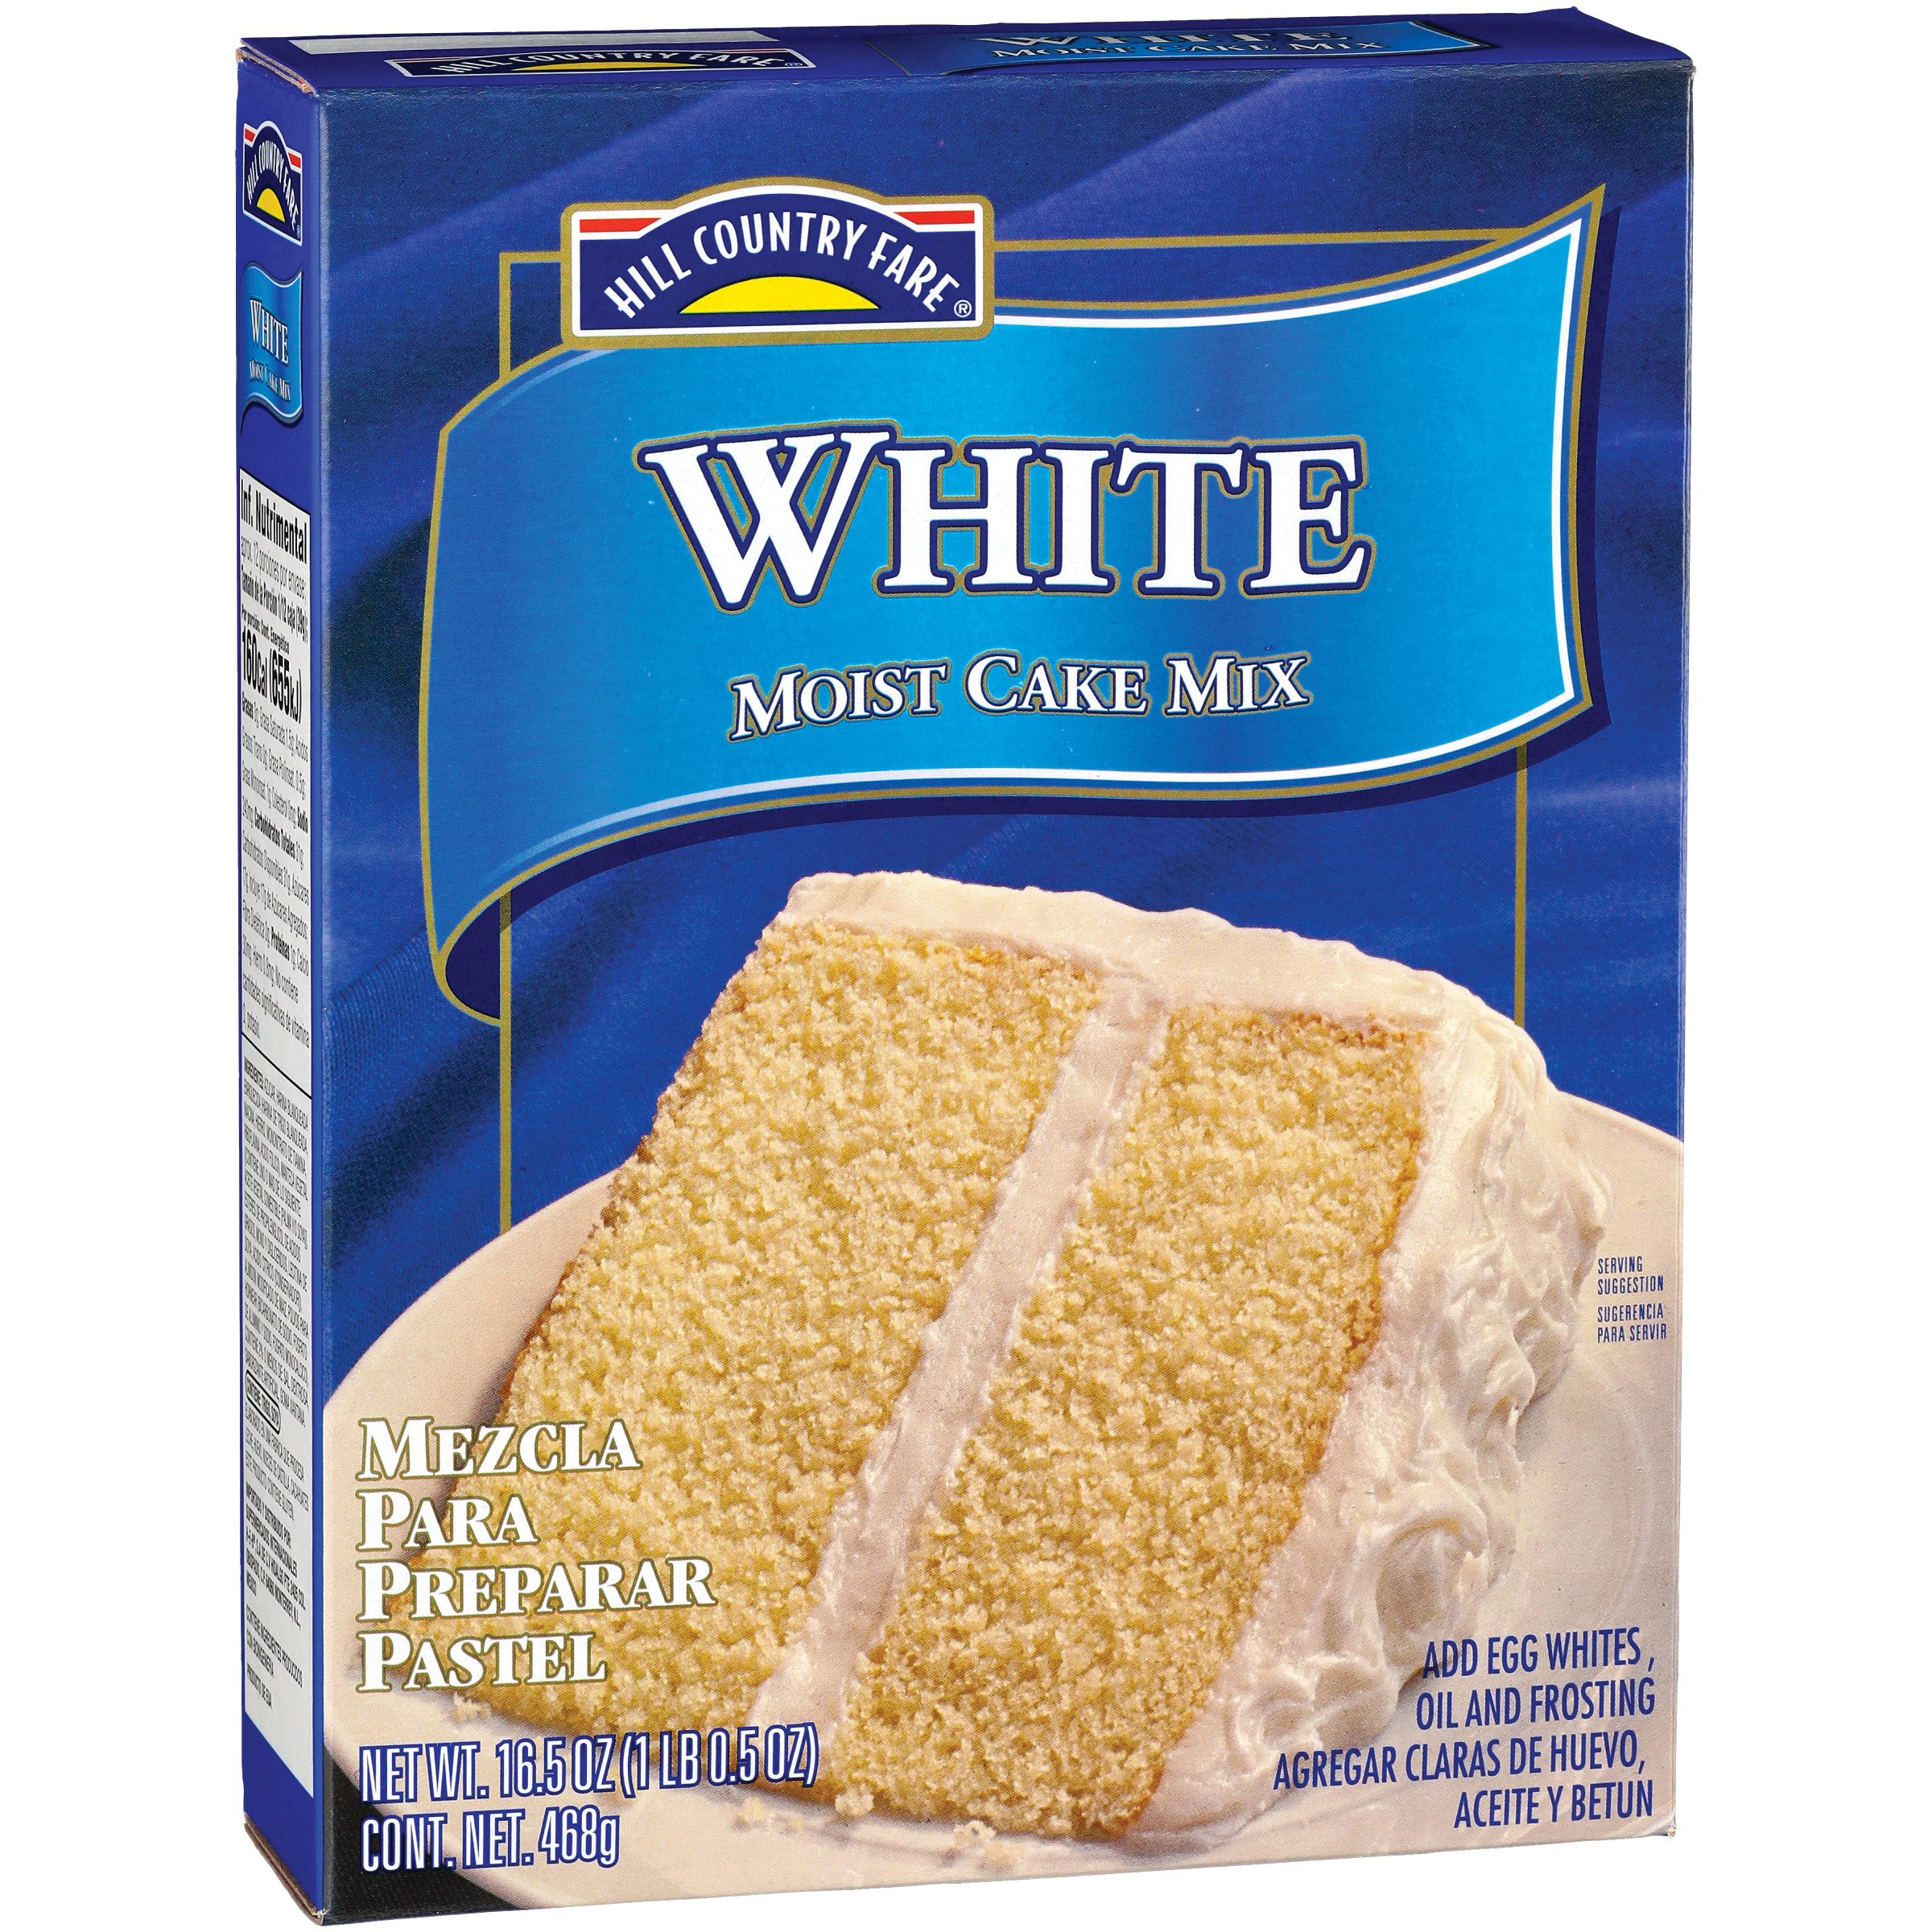 Hill Country Fare White Moist Cake Mix - Shop Baking Mixes at H-E-B